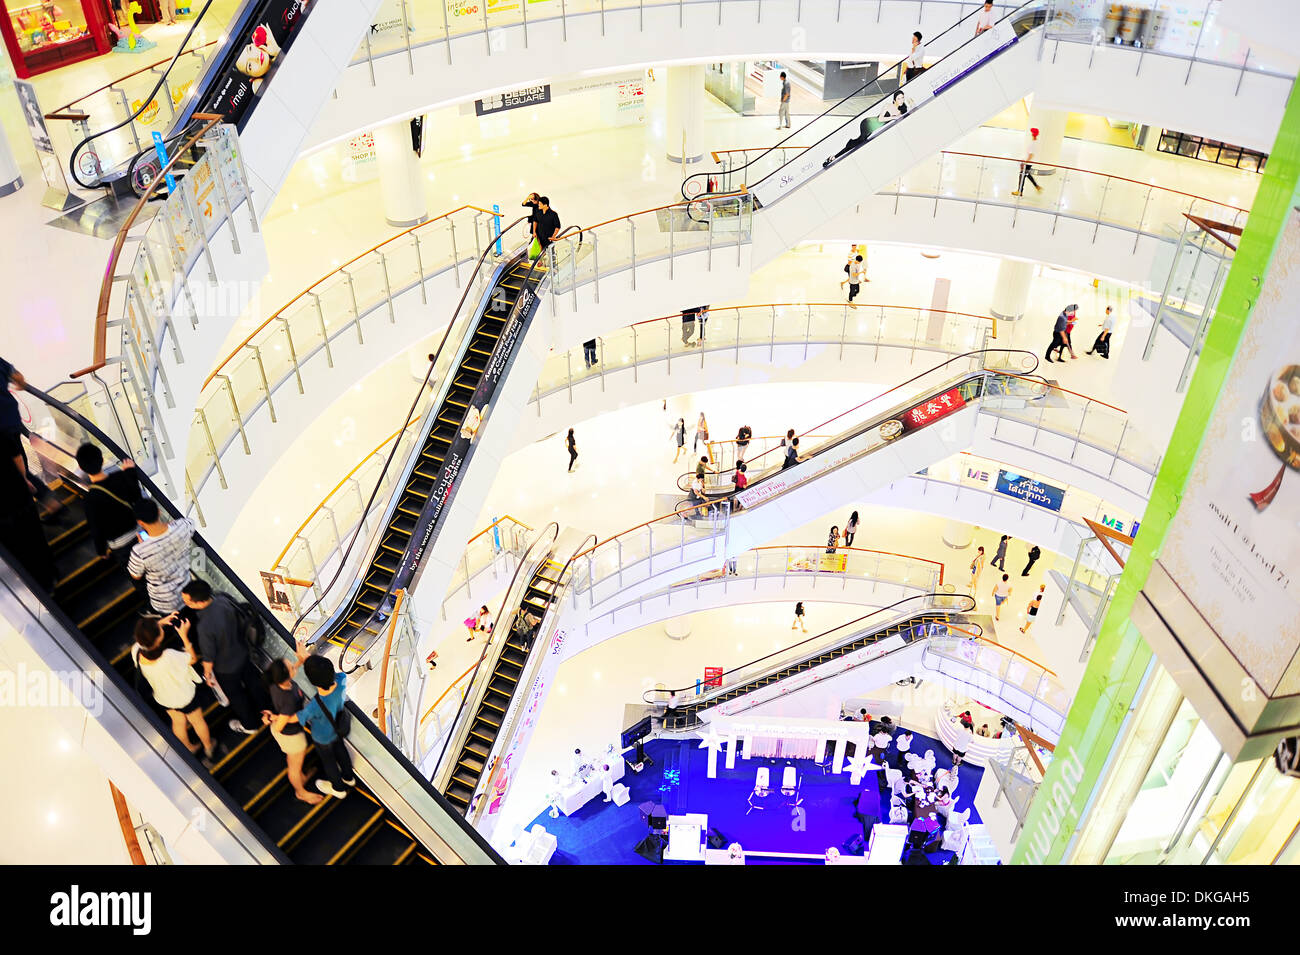 Central World shopping plaza in Bangkok Stock Photo